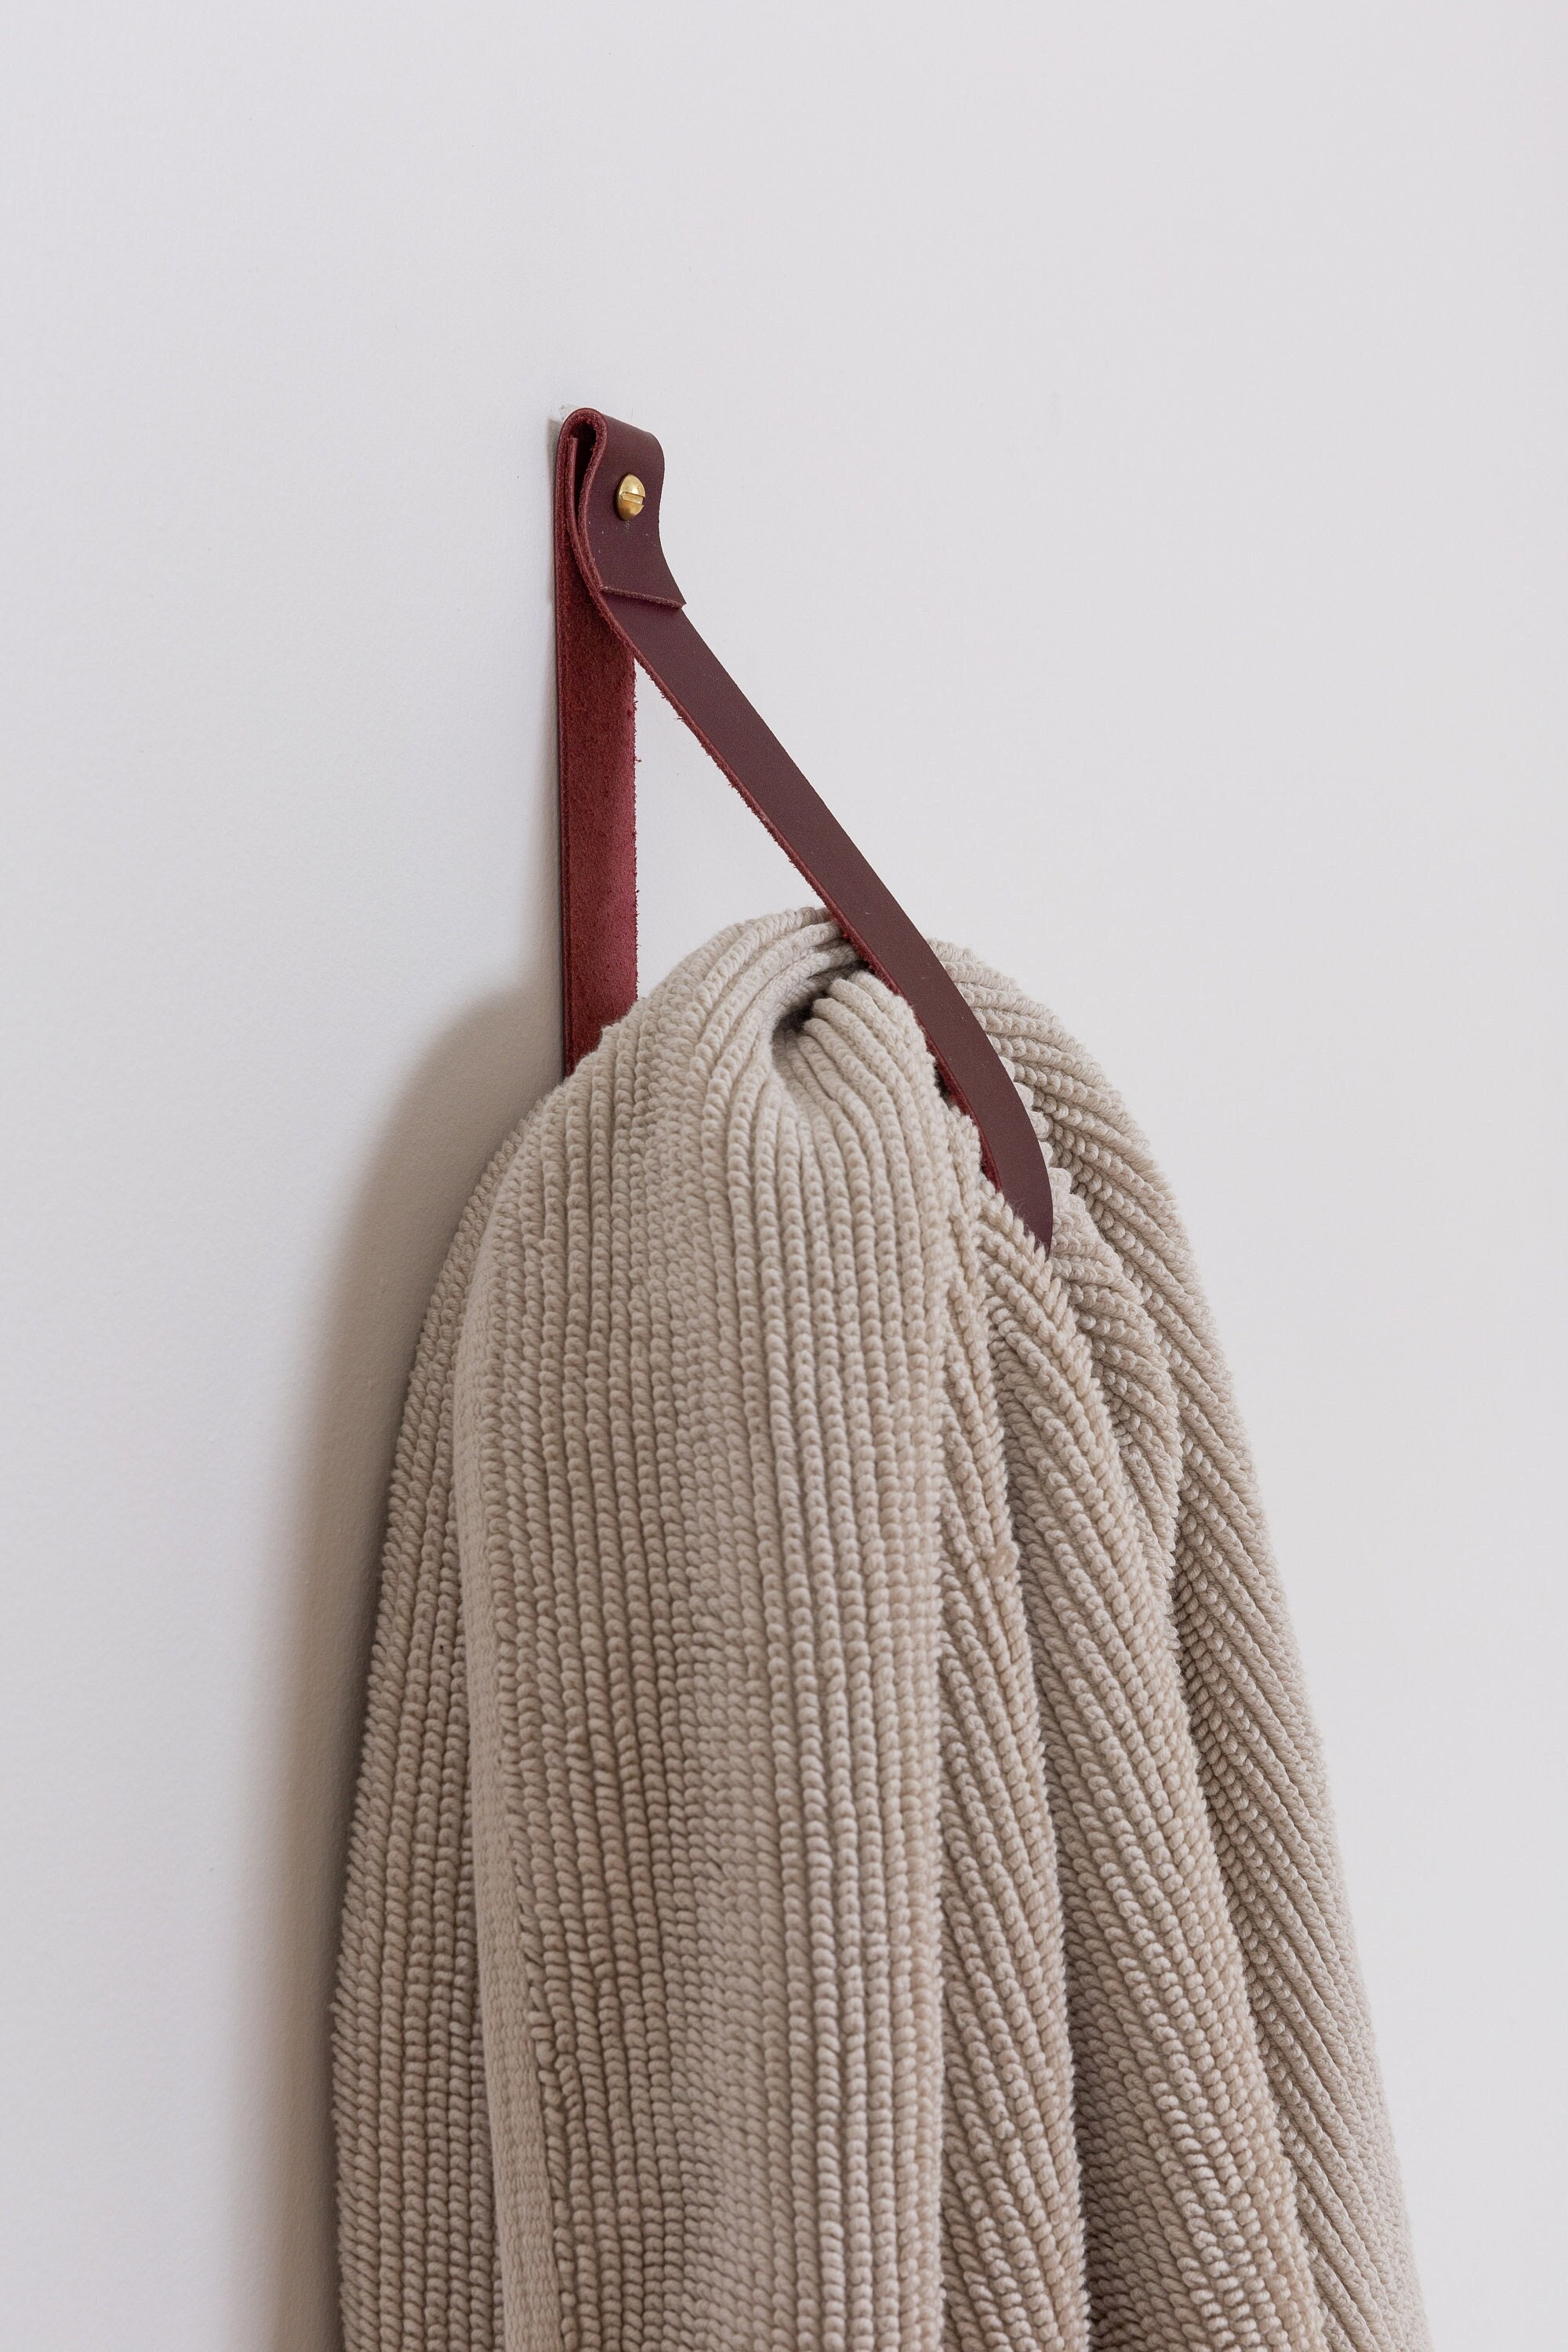 KEYAIIRA - Small Leather Wall Hook, wall hanging strap towel hook for wall  leather loop strap for scarf storage boat paddle holder minimal towel bar